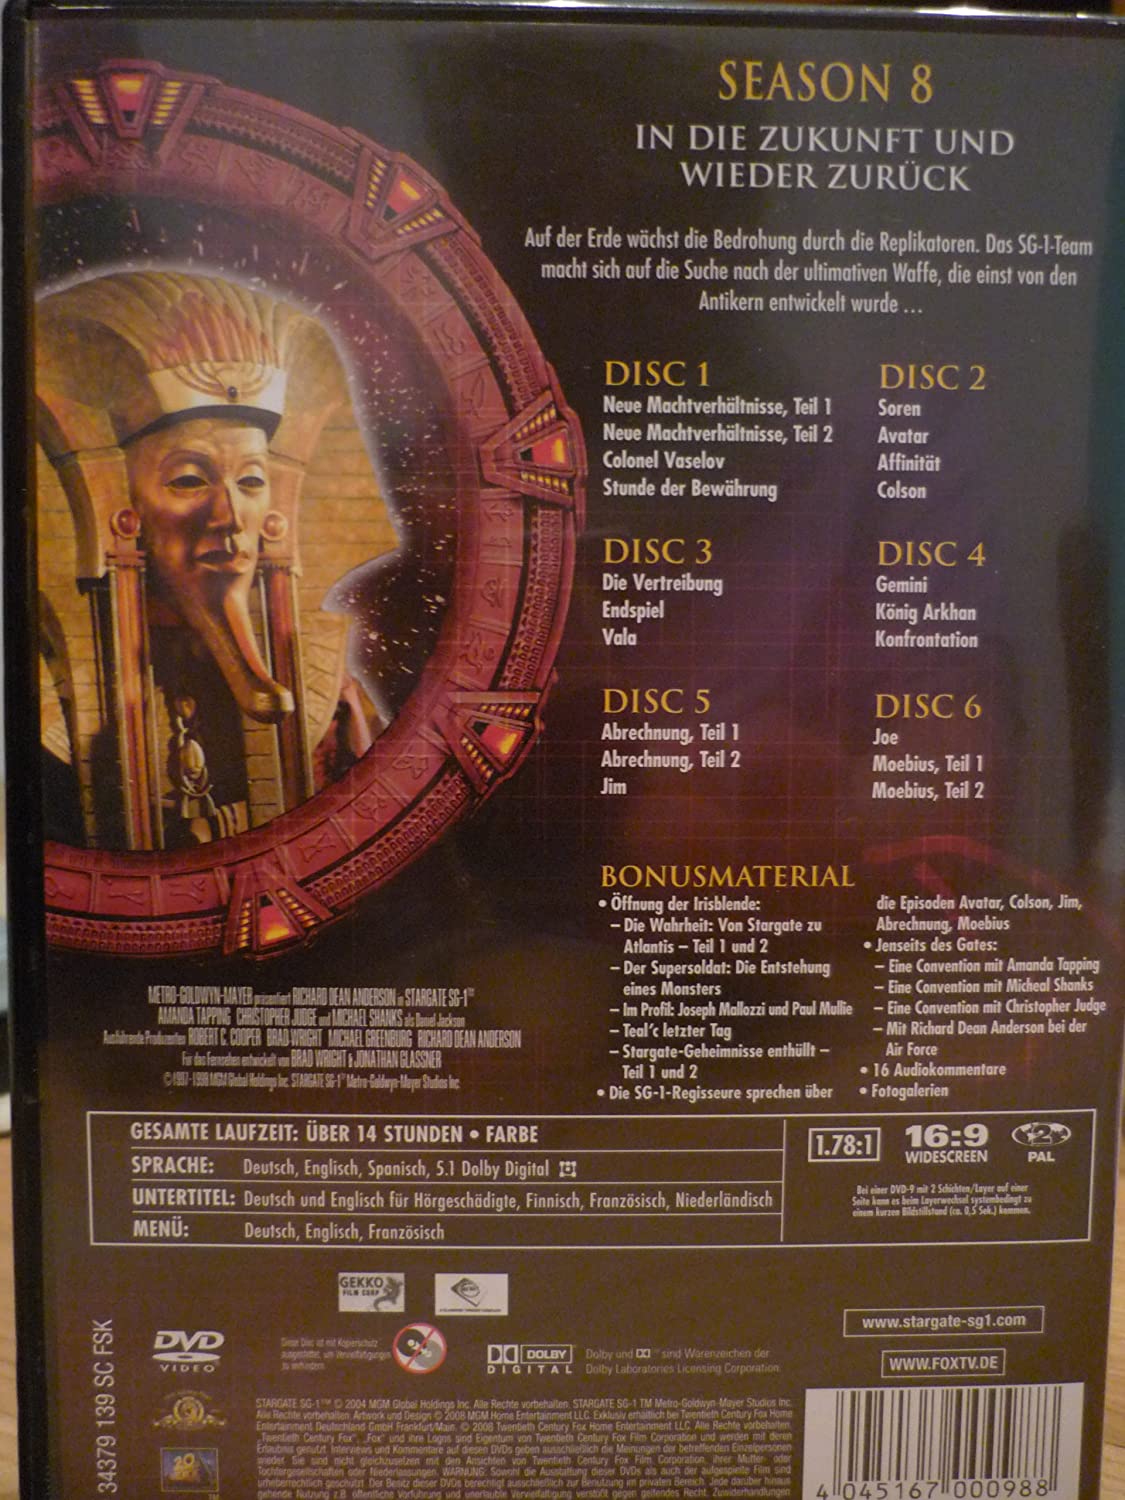 Stargate Kommando SG 1 - Staffel 08